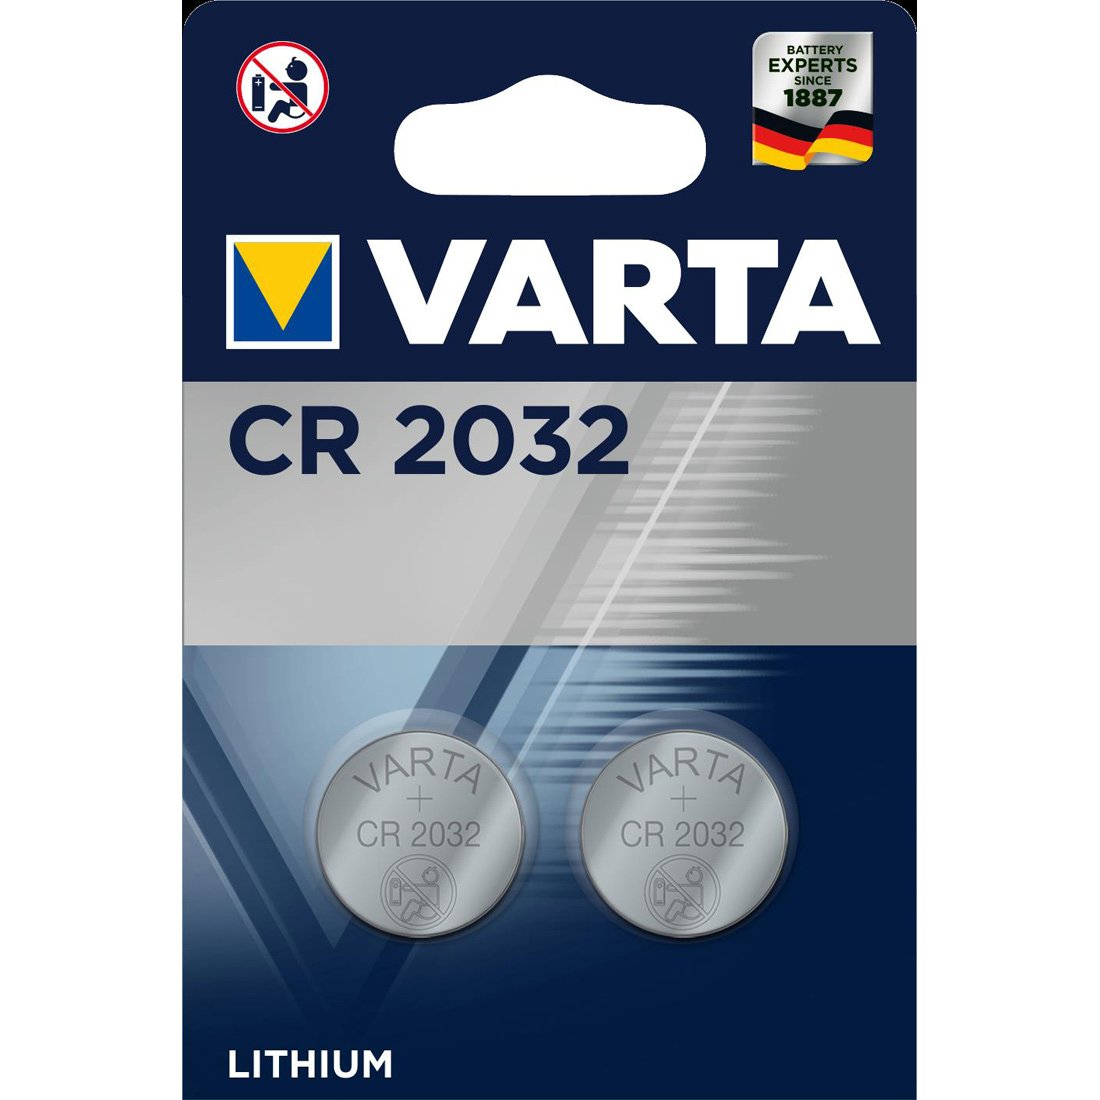 VARTA BATTERI LITHIUM CR2032 2-PACK